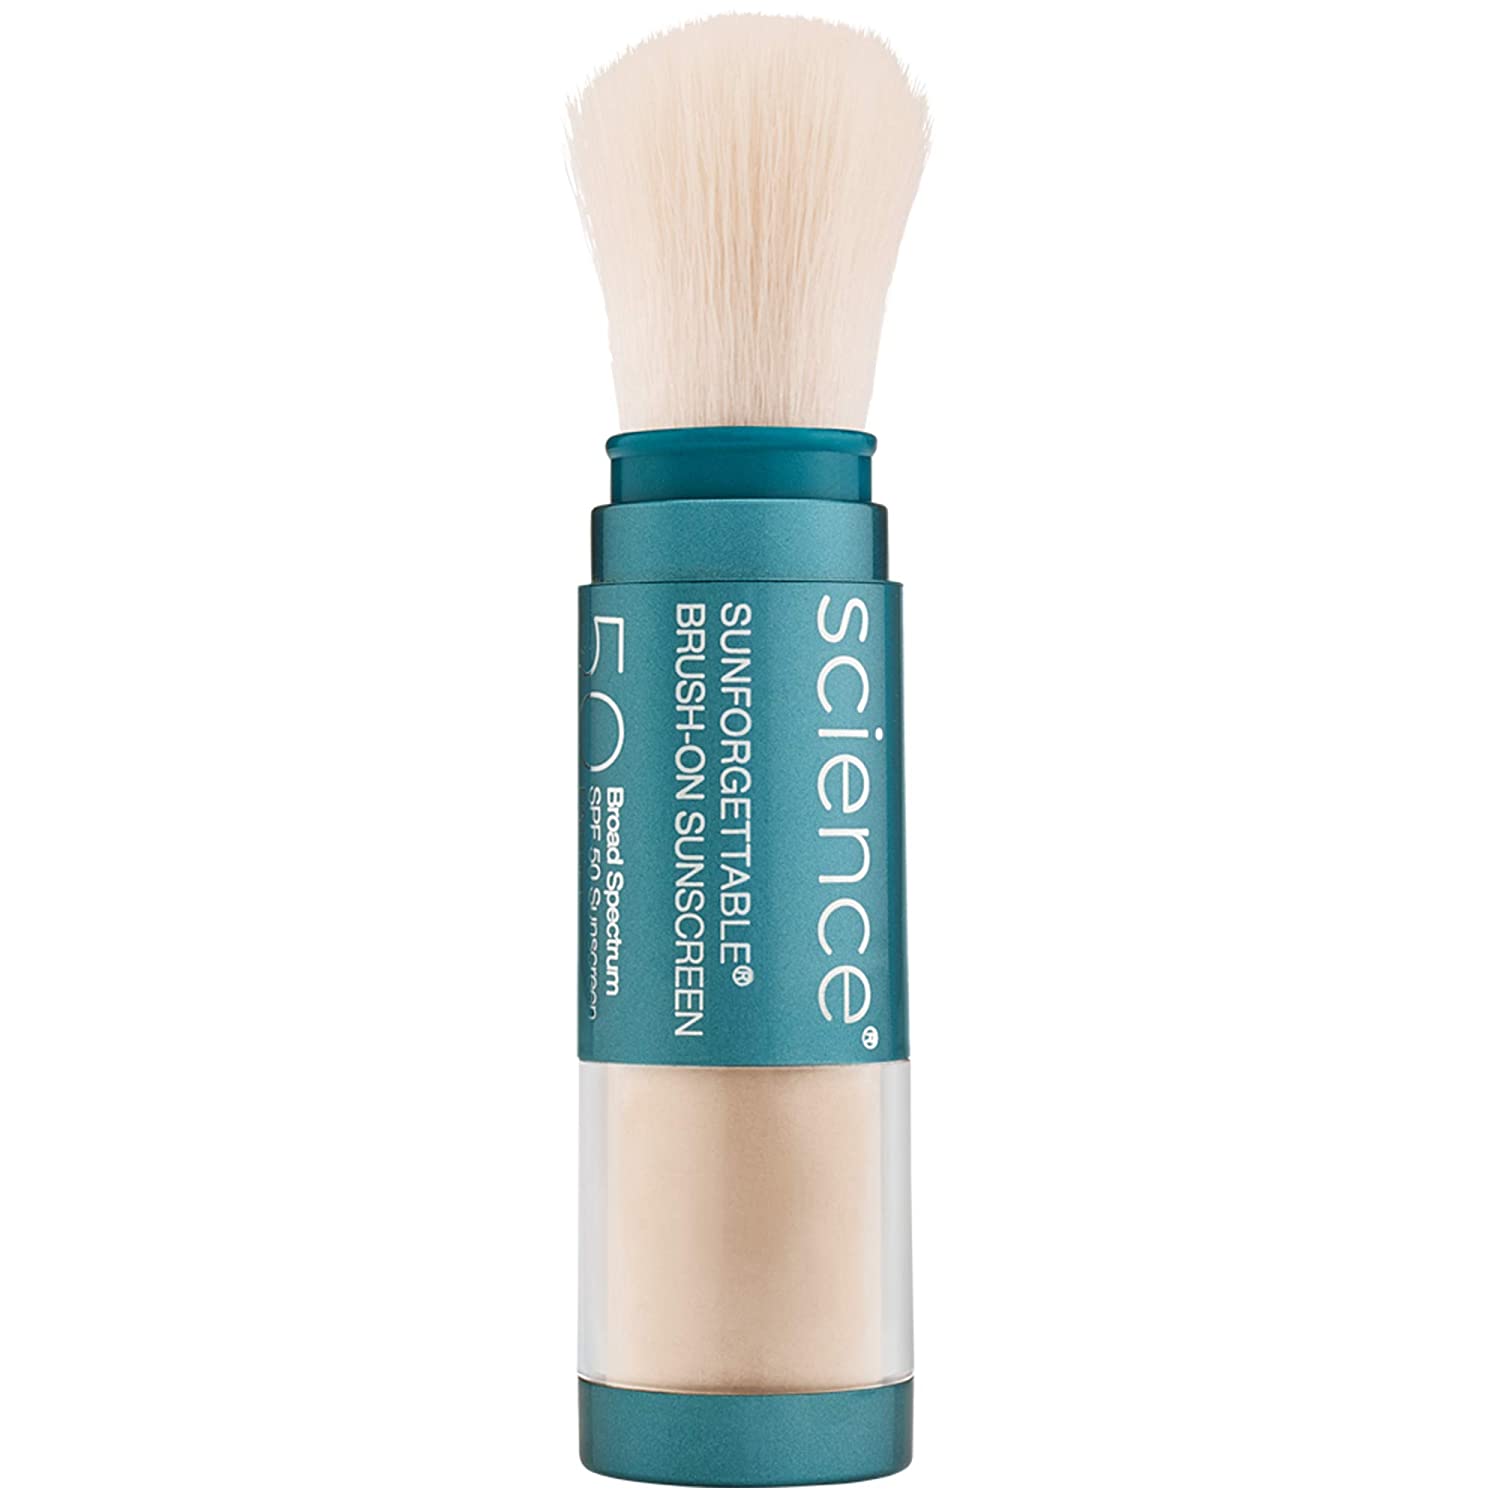 Colorescience Sunforgettable Mineral SPF 50 Sunscreen Brush 10g Powder :  Amazon.in: Beauty